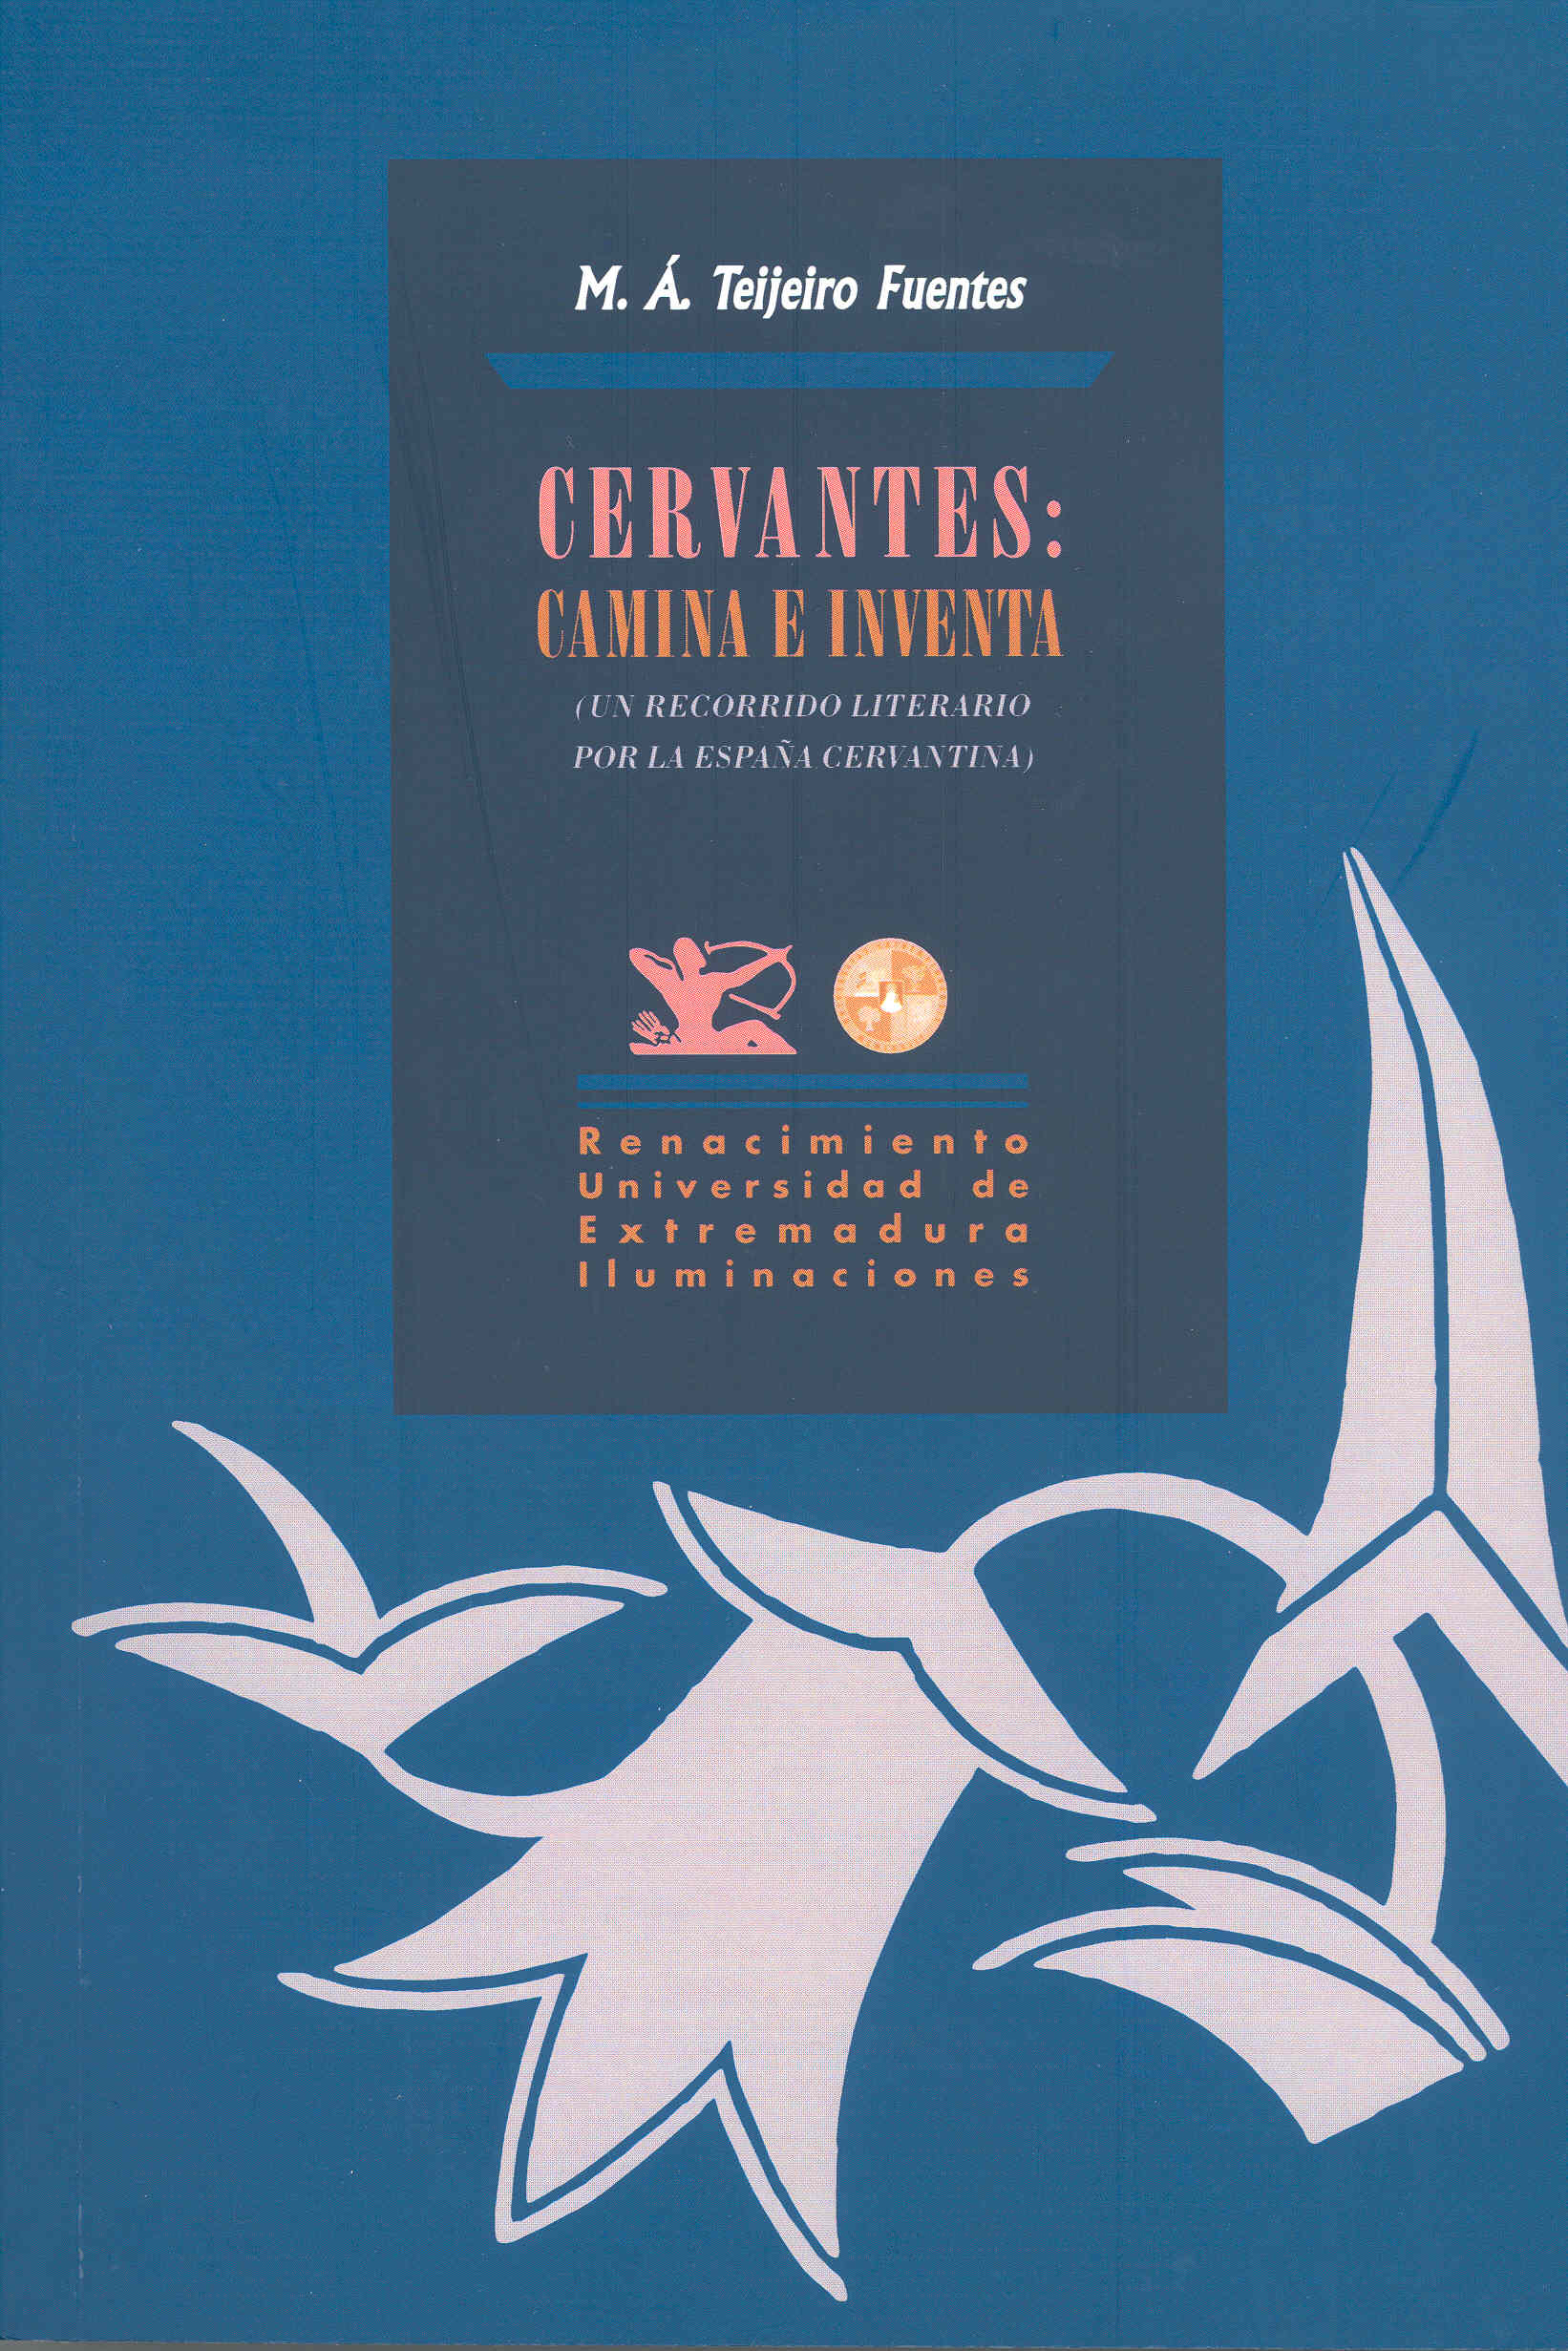 Imagen de portada del libro Cervantes